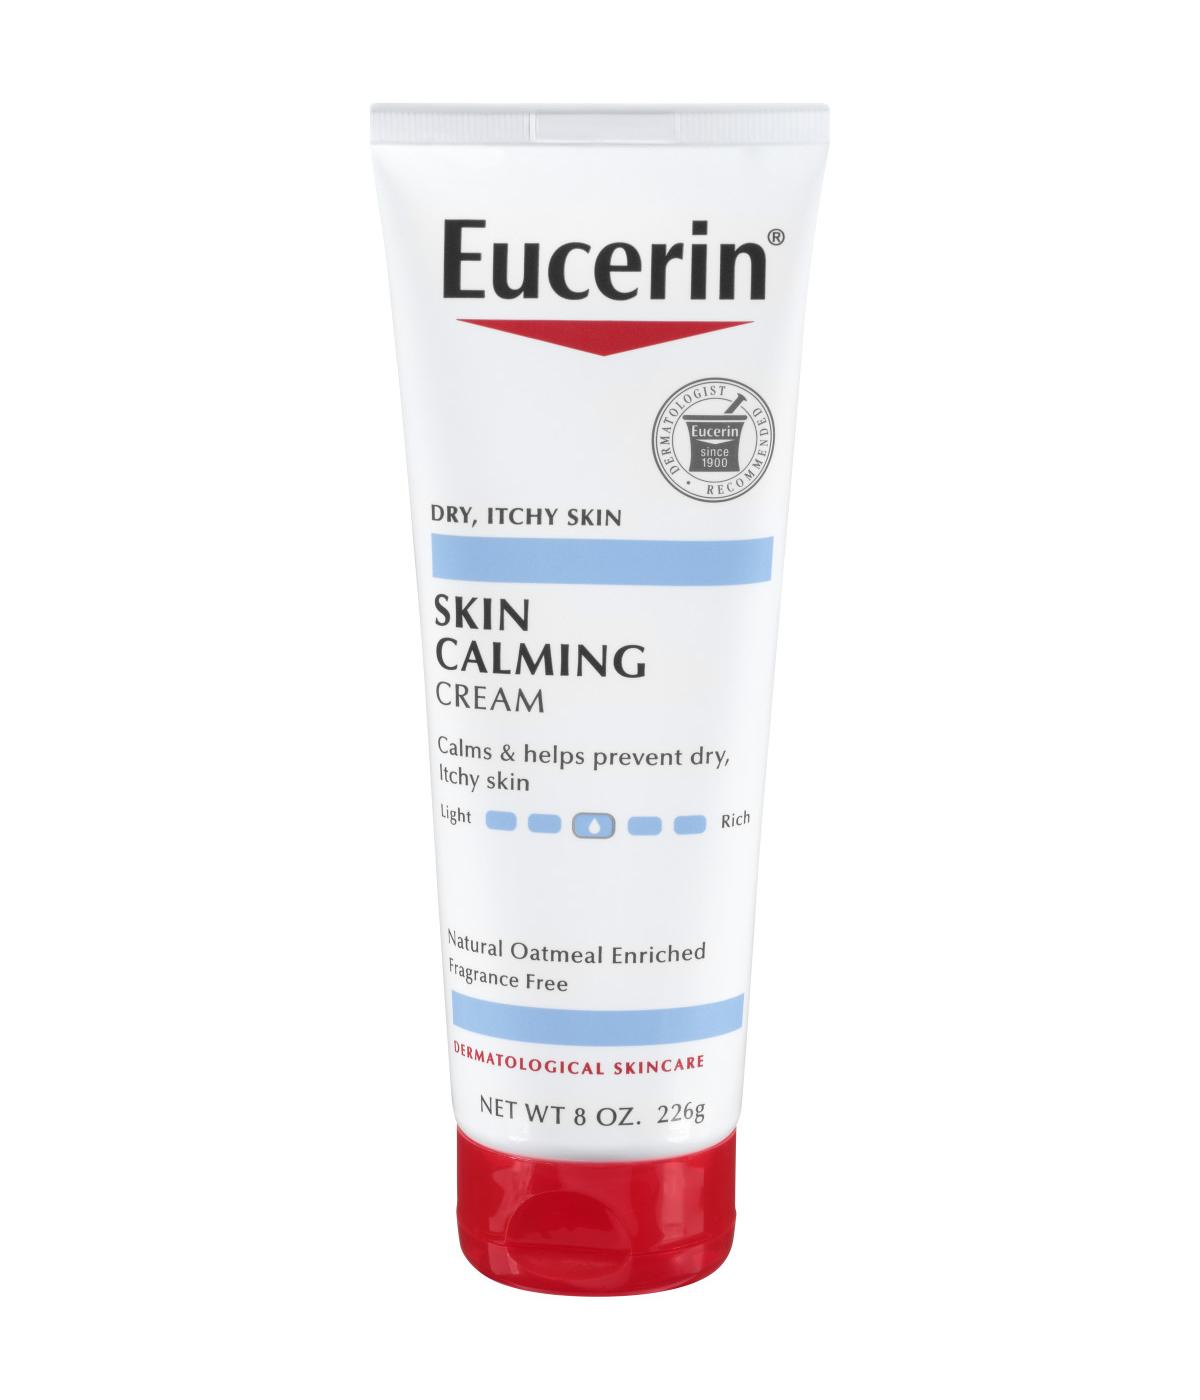 Eucerin Skin Calming Daily Moisturizing Cream Tube; image 1 of 4